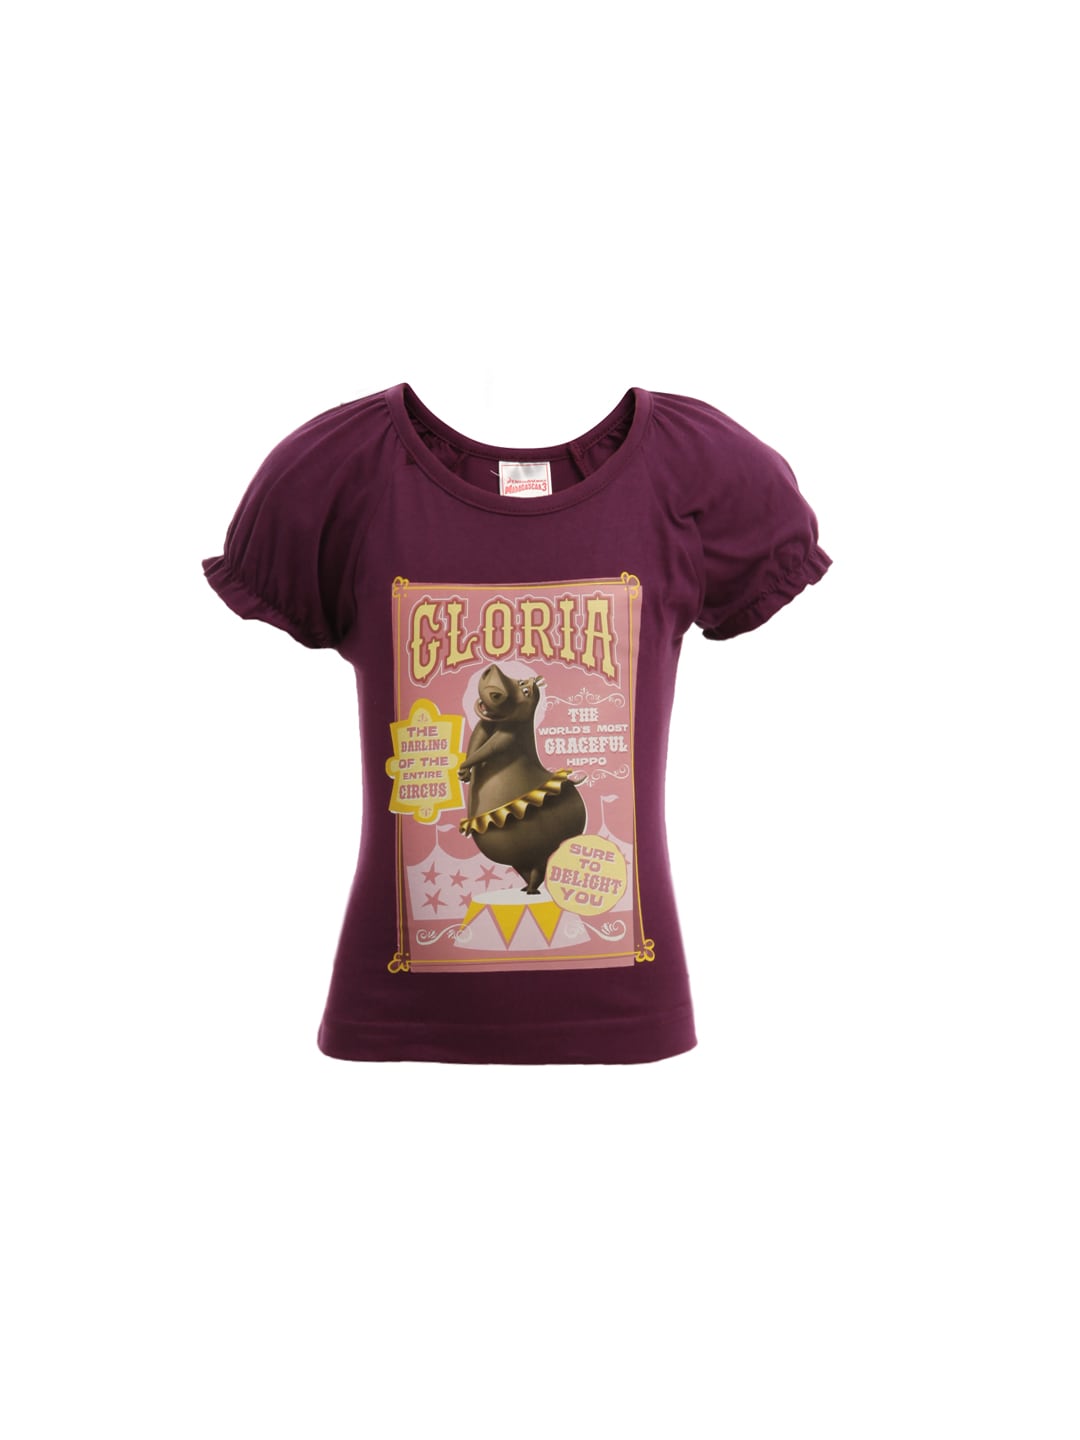 Madagascar3 Girls Purple Printed T-Shirt